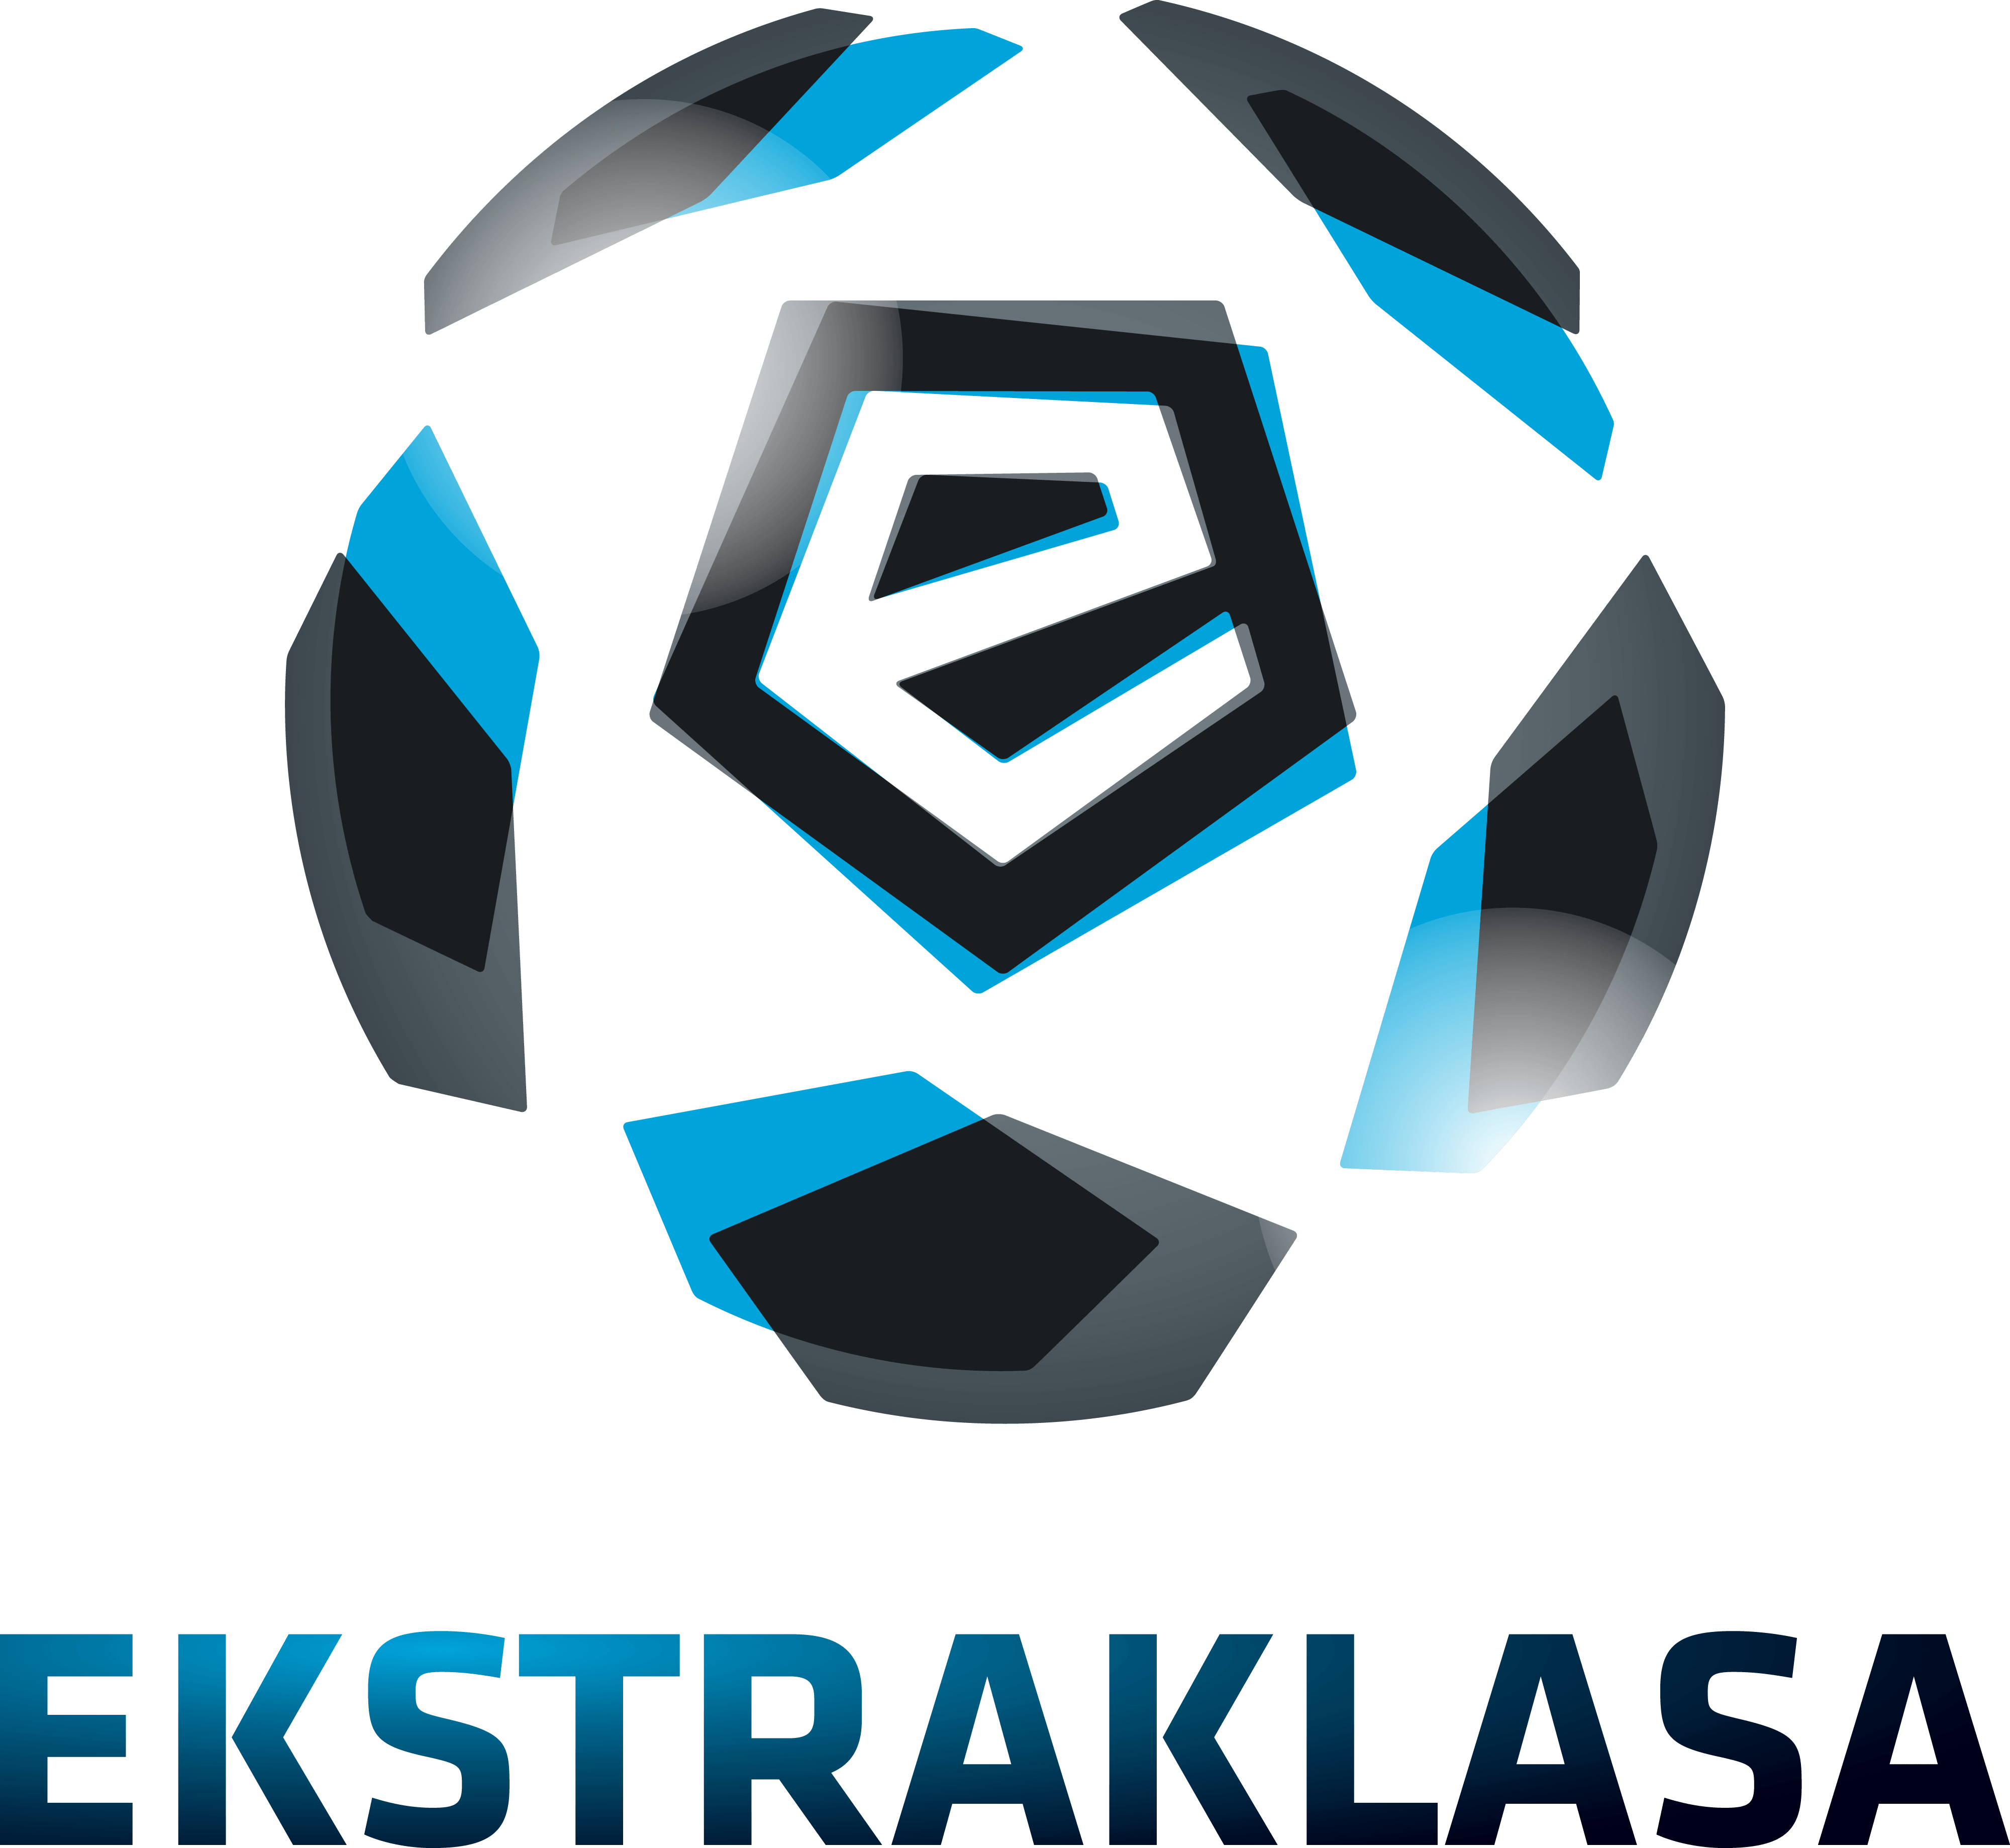 Polish Ekstraklasa football l